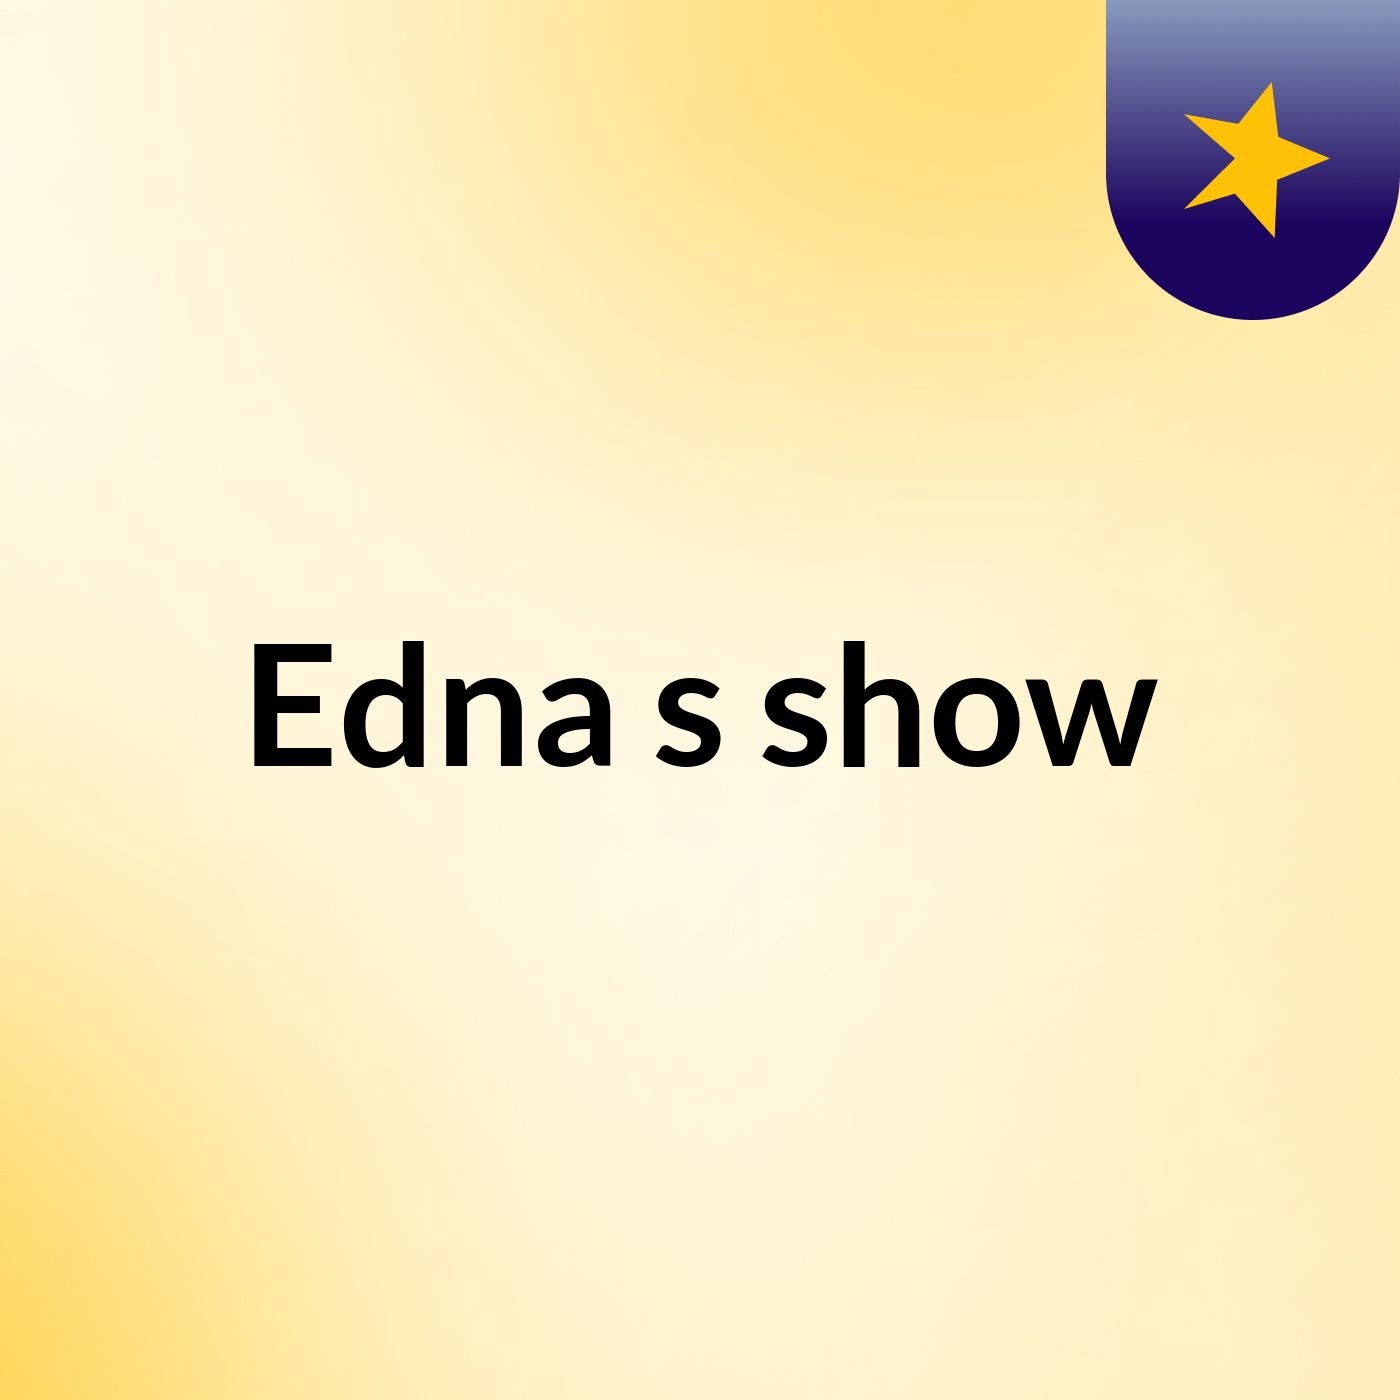 Edna's show